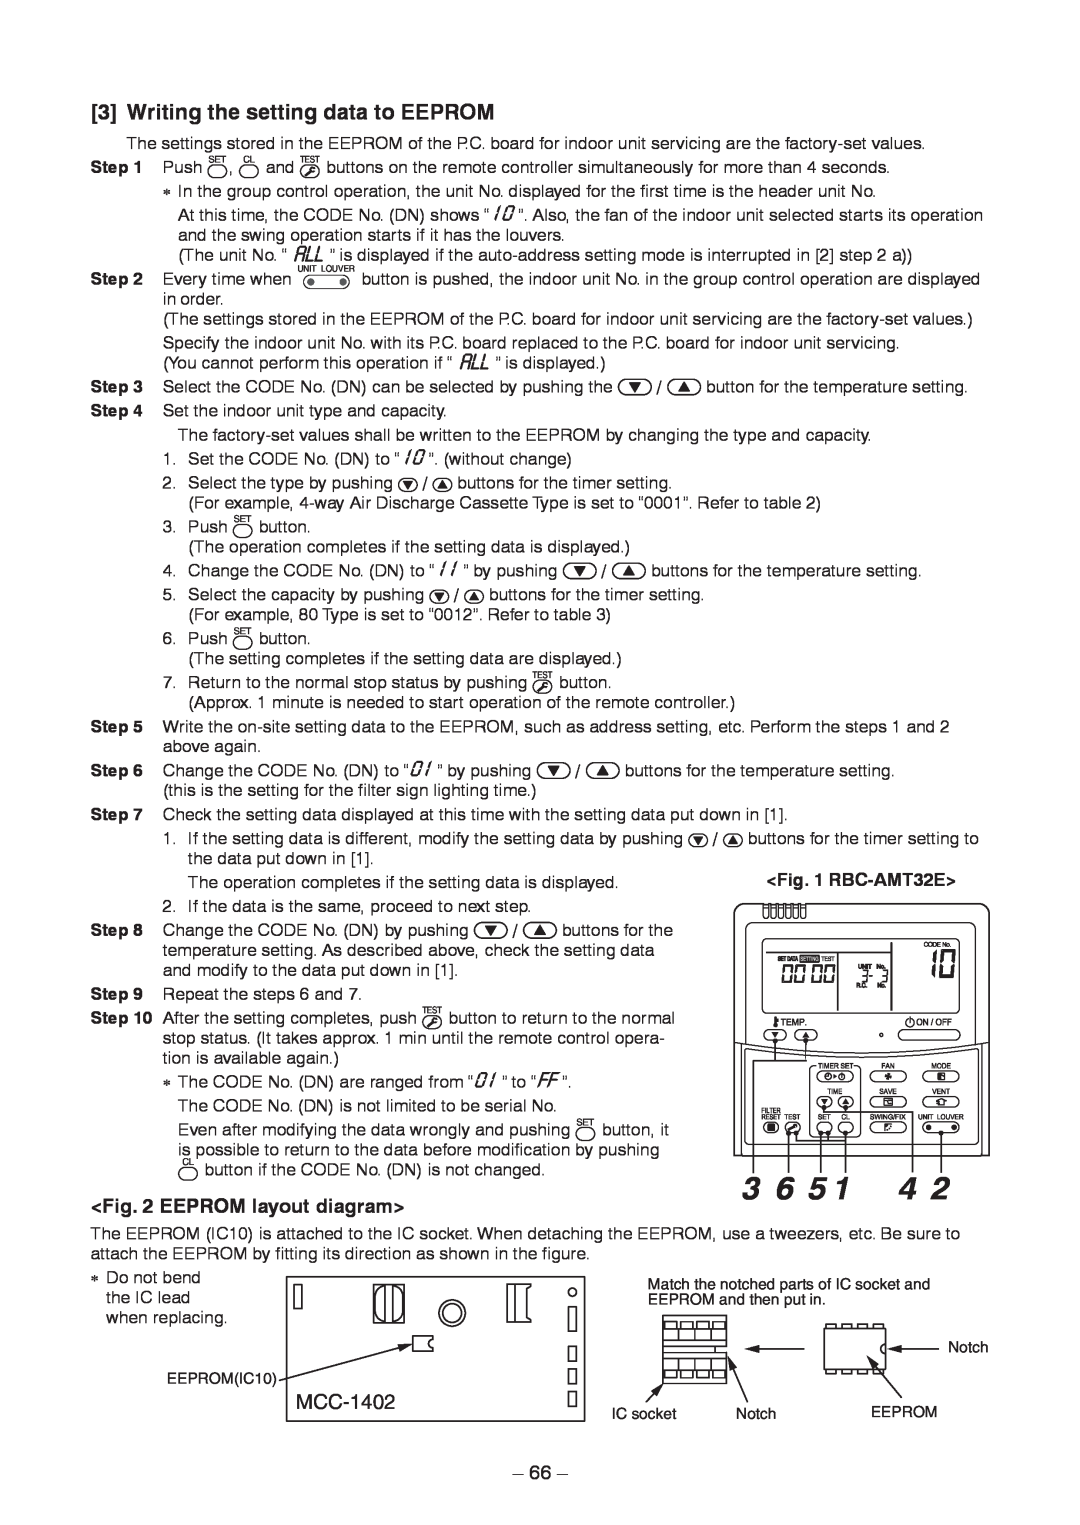 Toshiba RAV-SM564MUT-E, RAV-SM454MUT-E, RAV-SM404MUT-TR 3 6 5, < EEPROM layout diagram>, MCC-1402, 66, < RBC-AMT32E> 